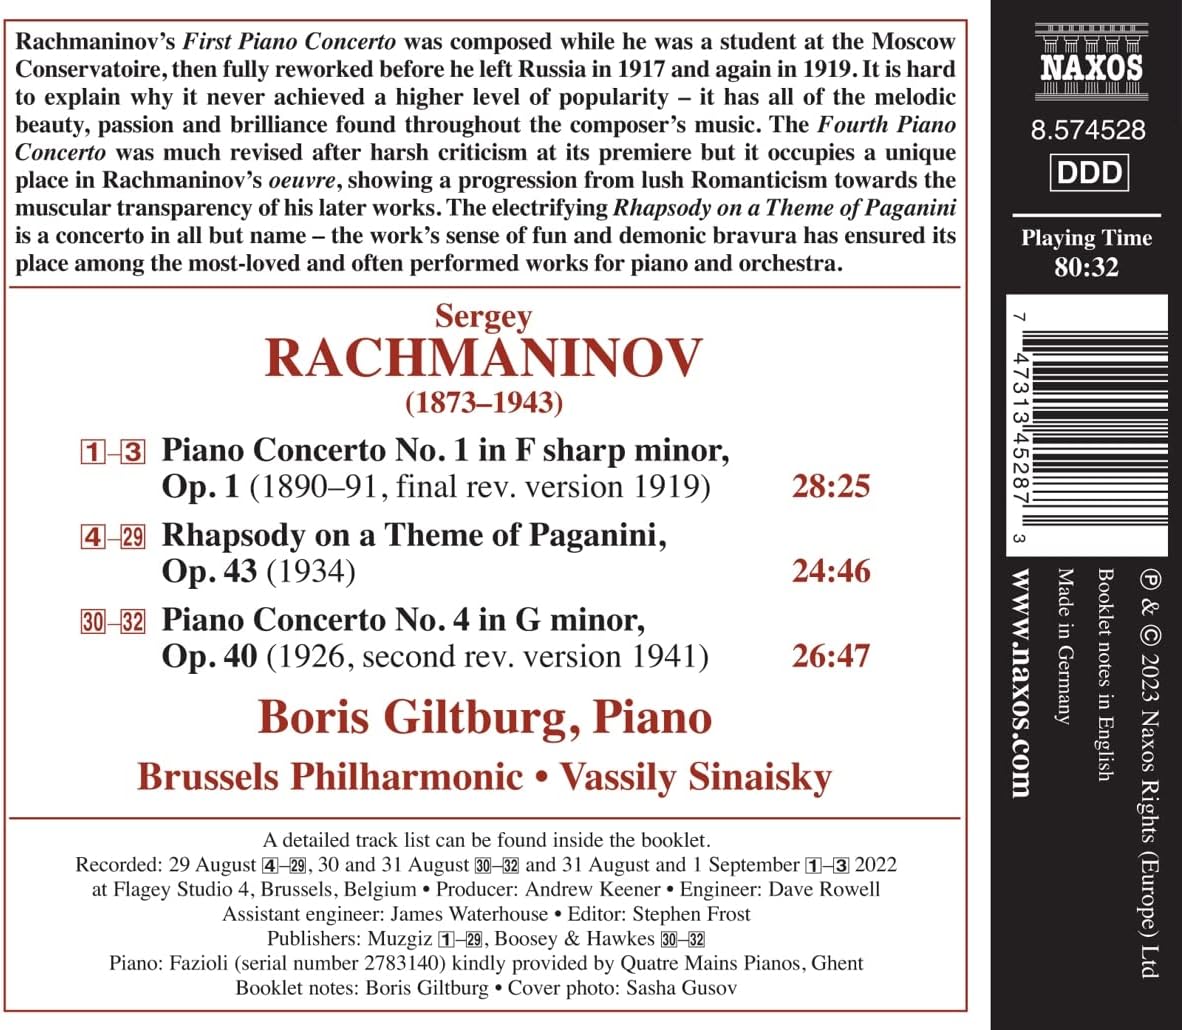 Rachmaninov: Piano Concertos Nos. 1 and 4; Rhapsody on a Theme of Paganini | Boris Giltburg, Brussels Philharmonic, Vassily Sinaisky